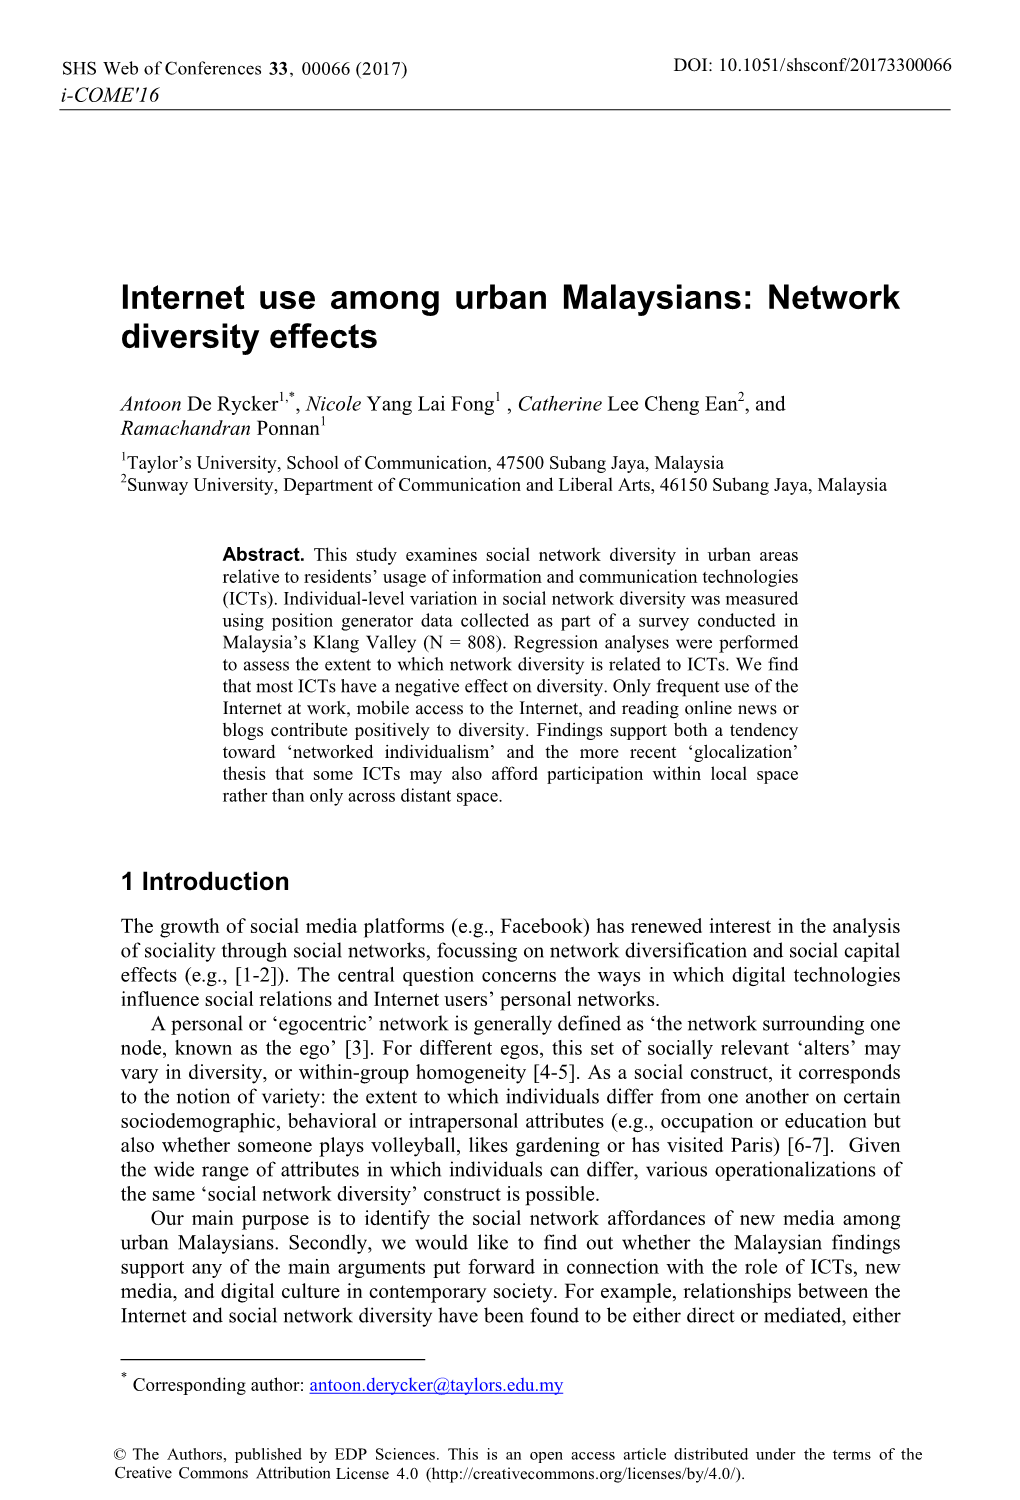 Internet Use Among Urban Malaysians: Network Diversity Effects